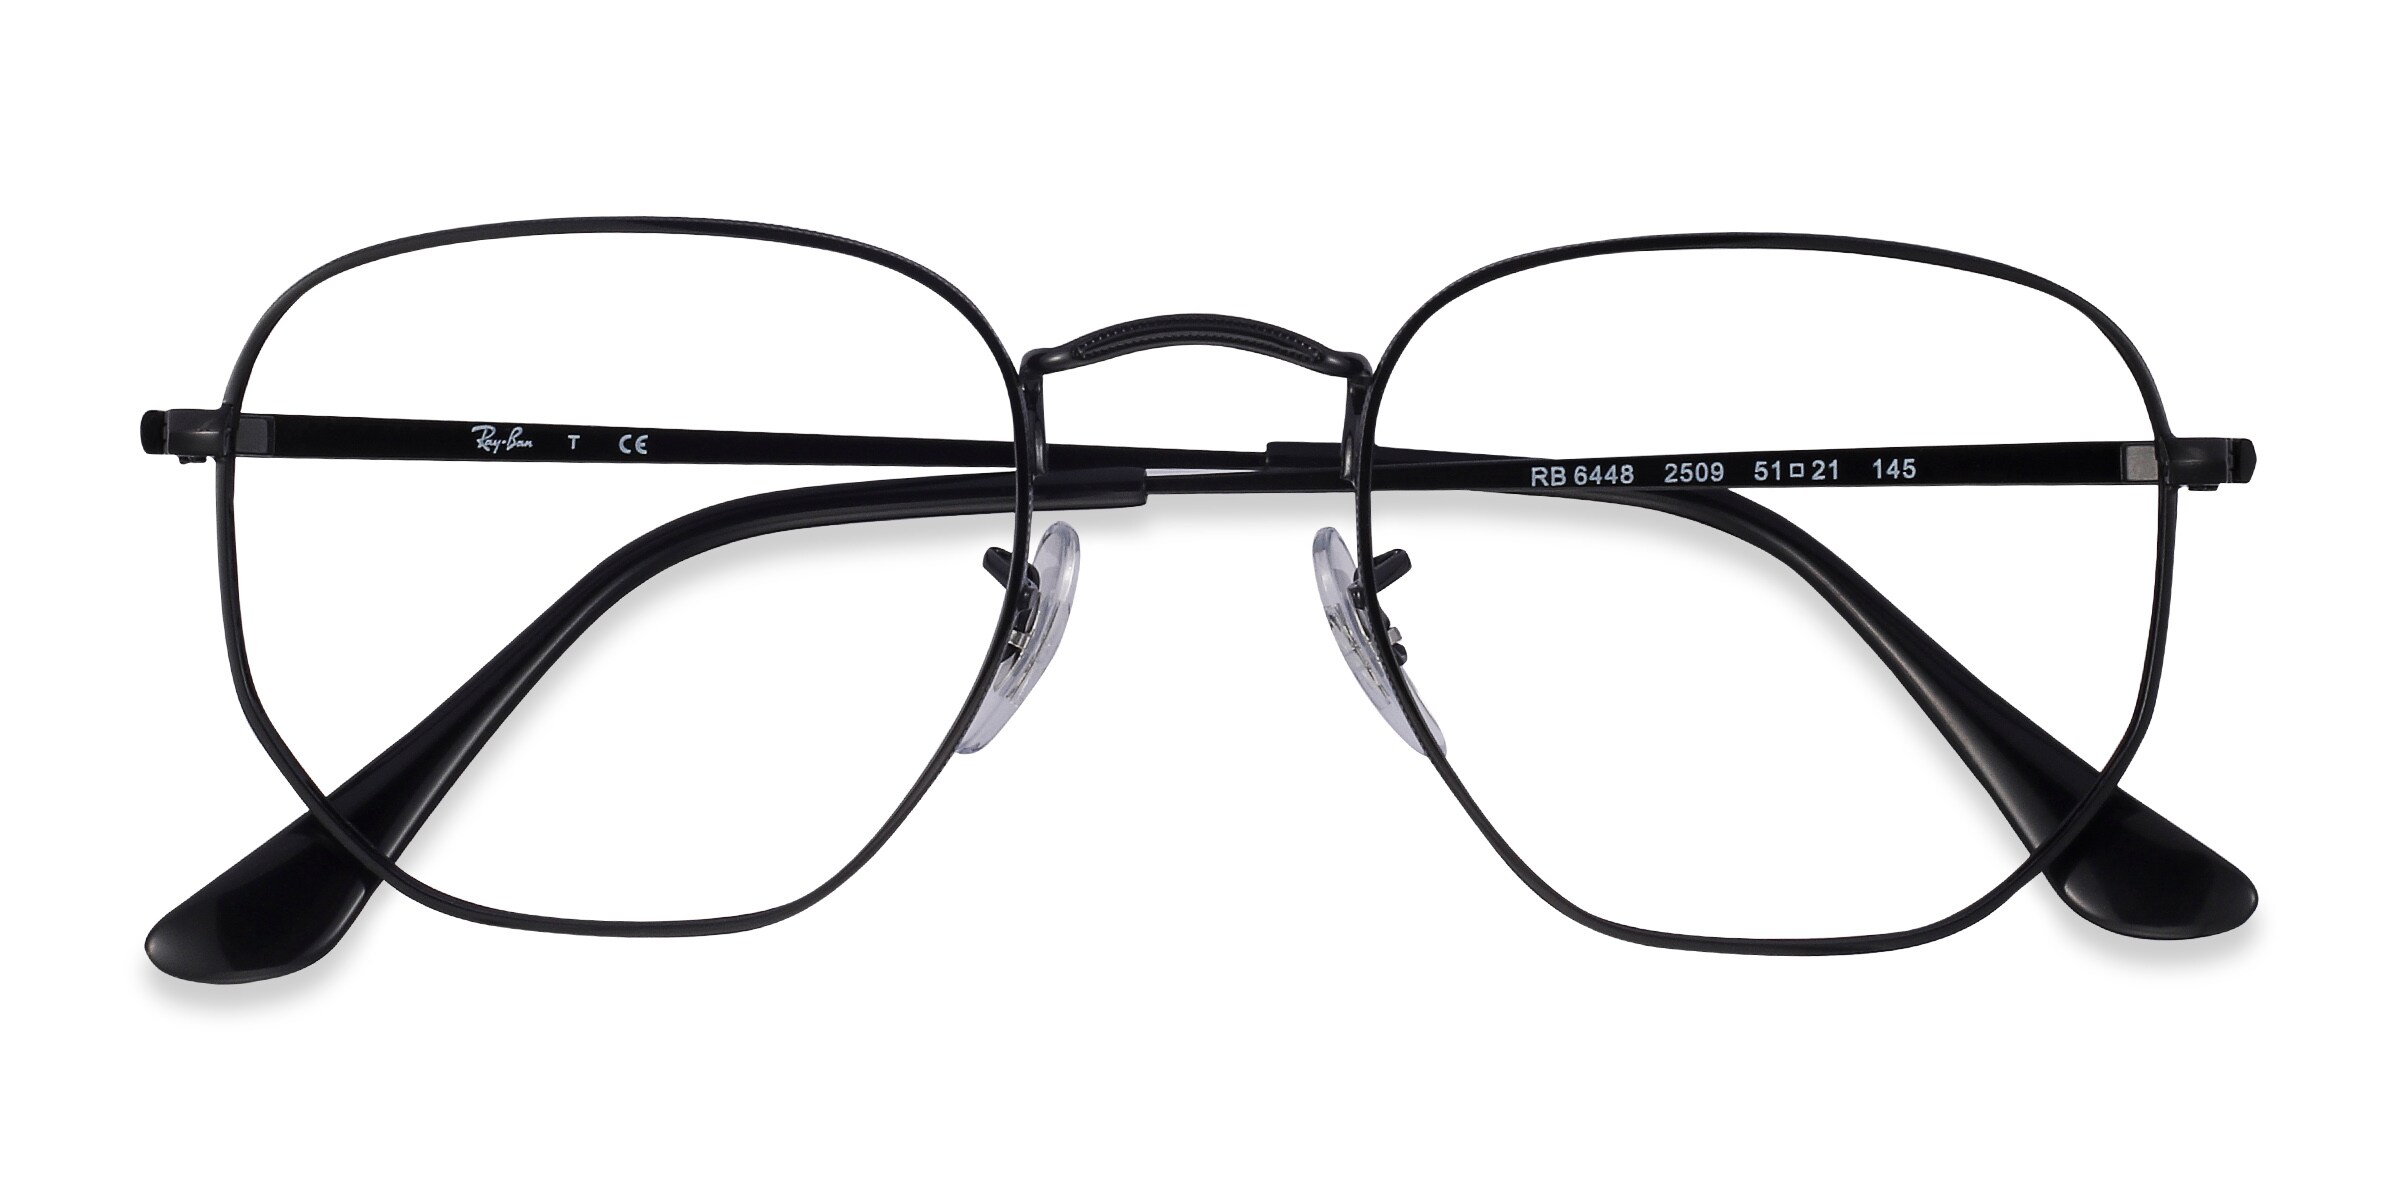 Ray-Ban RB6448 - Square Black Frame Eyeglasses | EyeBuyDirect